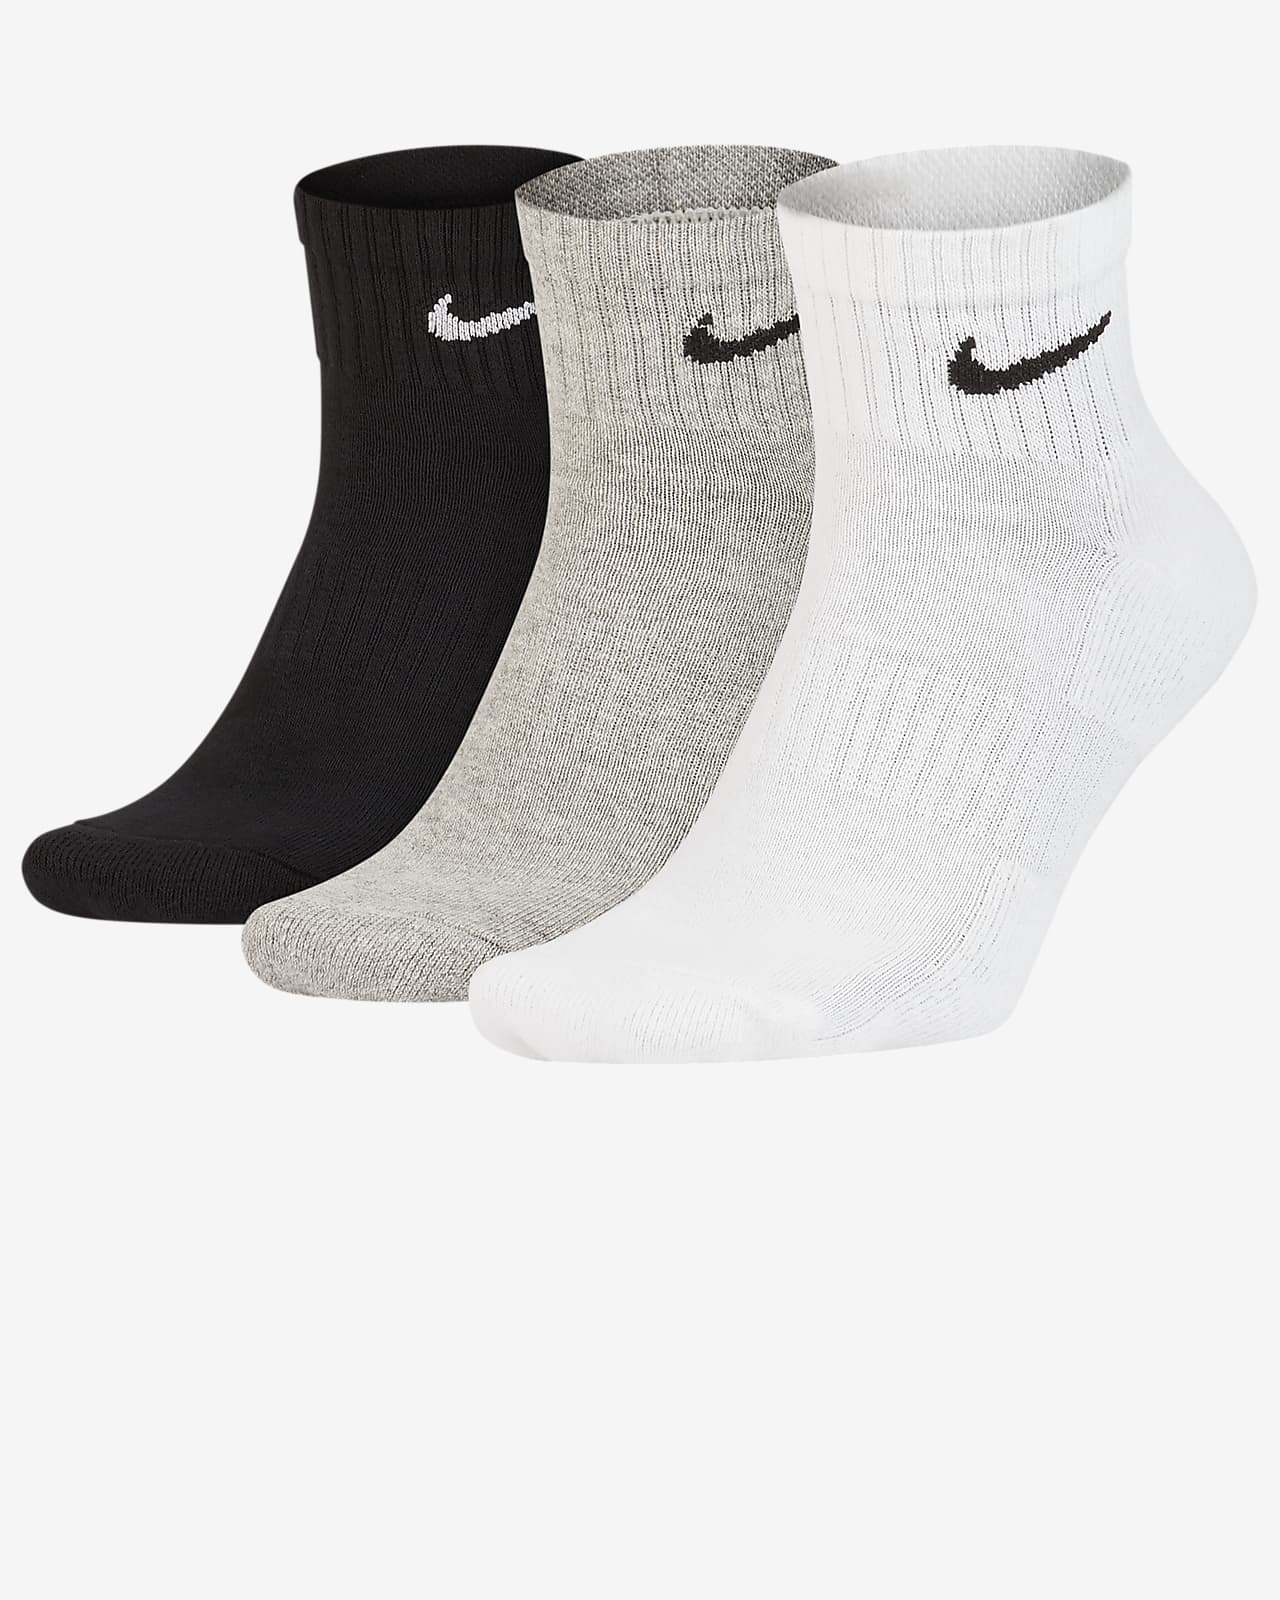 Nike Everyday Plus Cushion Low Training Socks Finland, SAVE mpgc.net